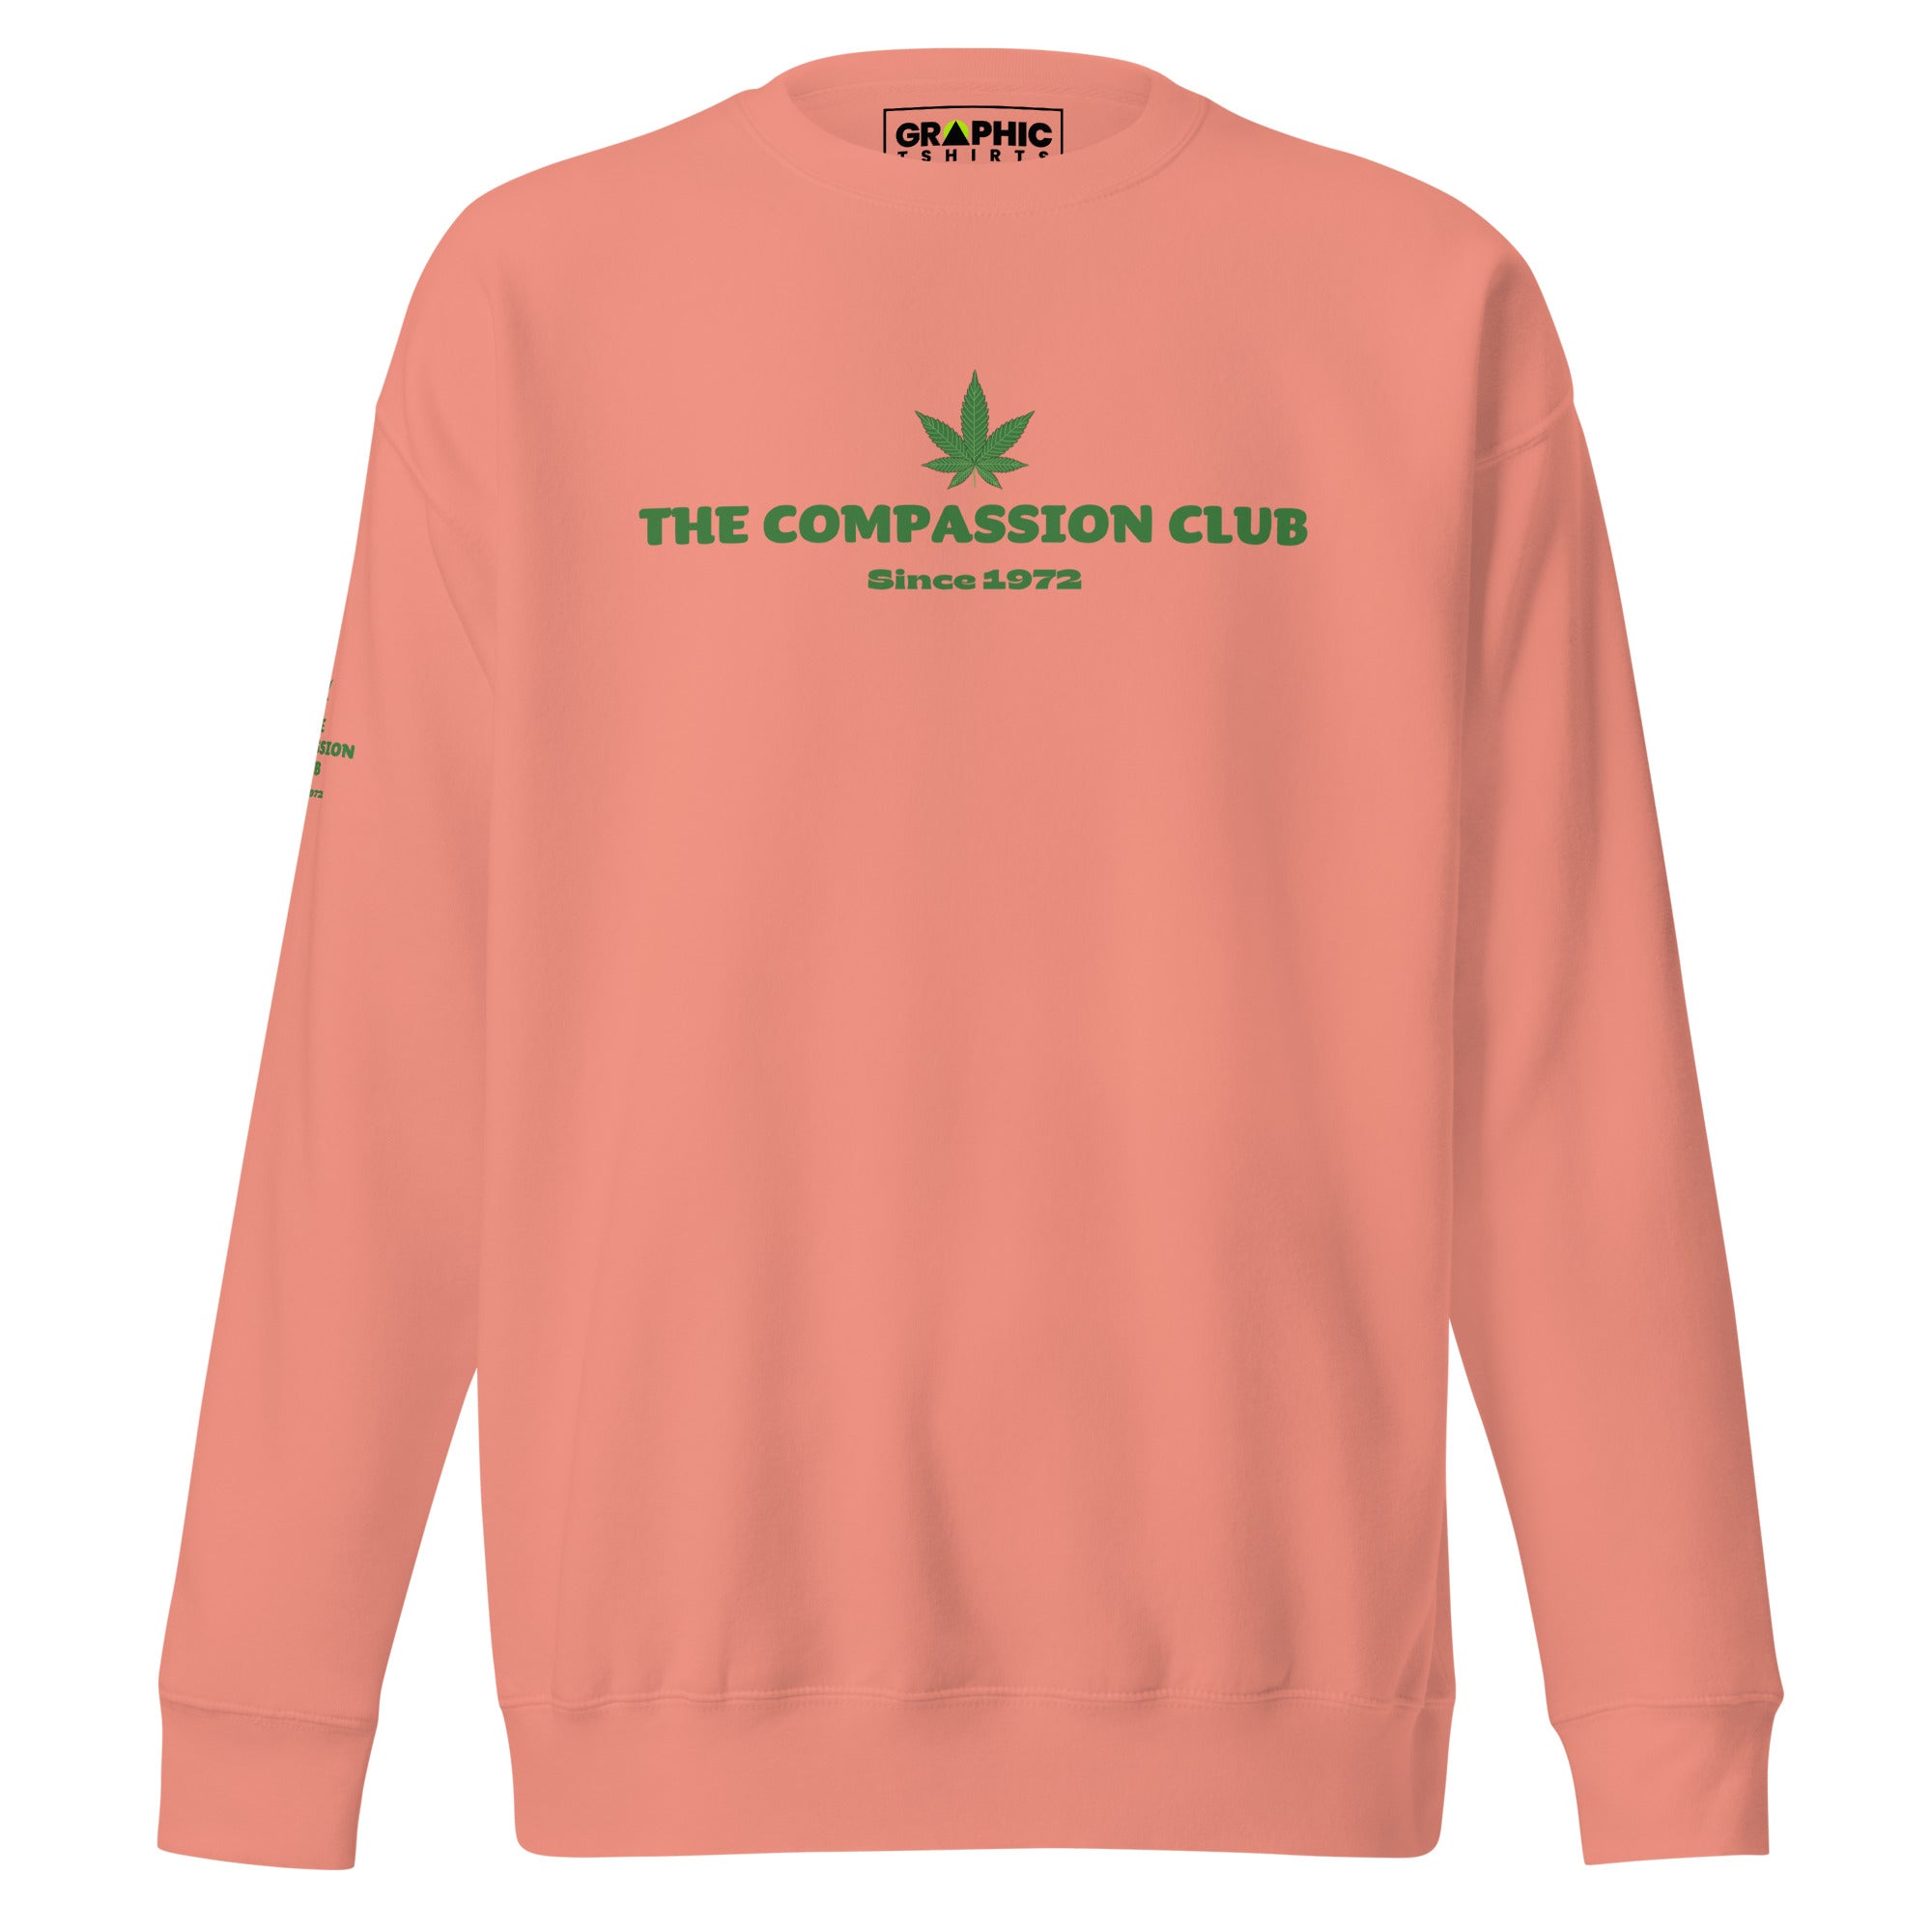 Unisex Premium Sweatshirt - The Compassion Club Since 1972 - GRAPHIC T-SHIRTS